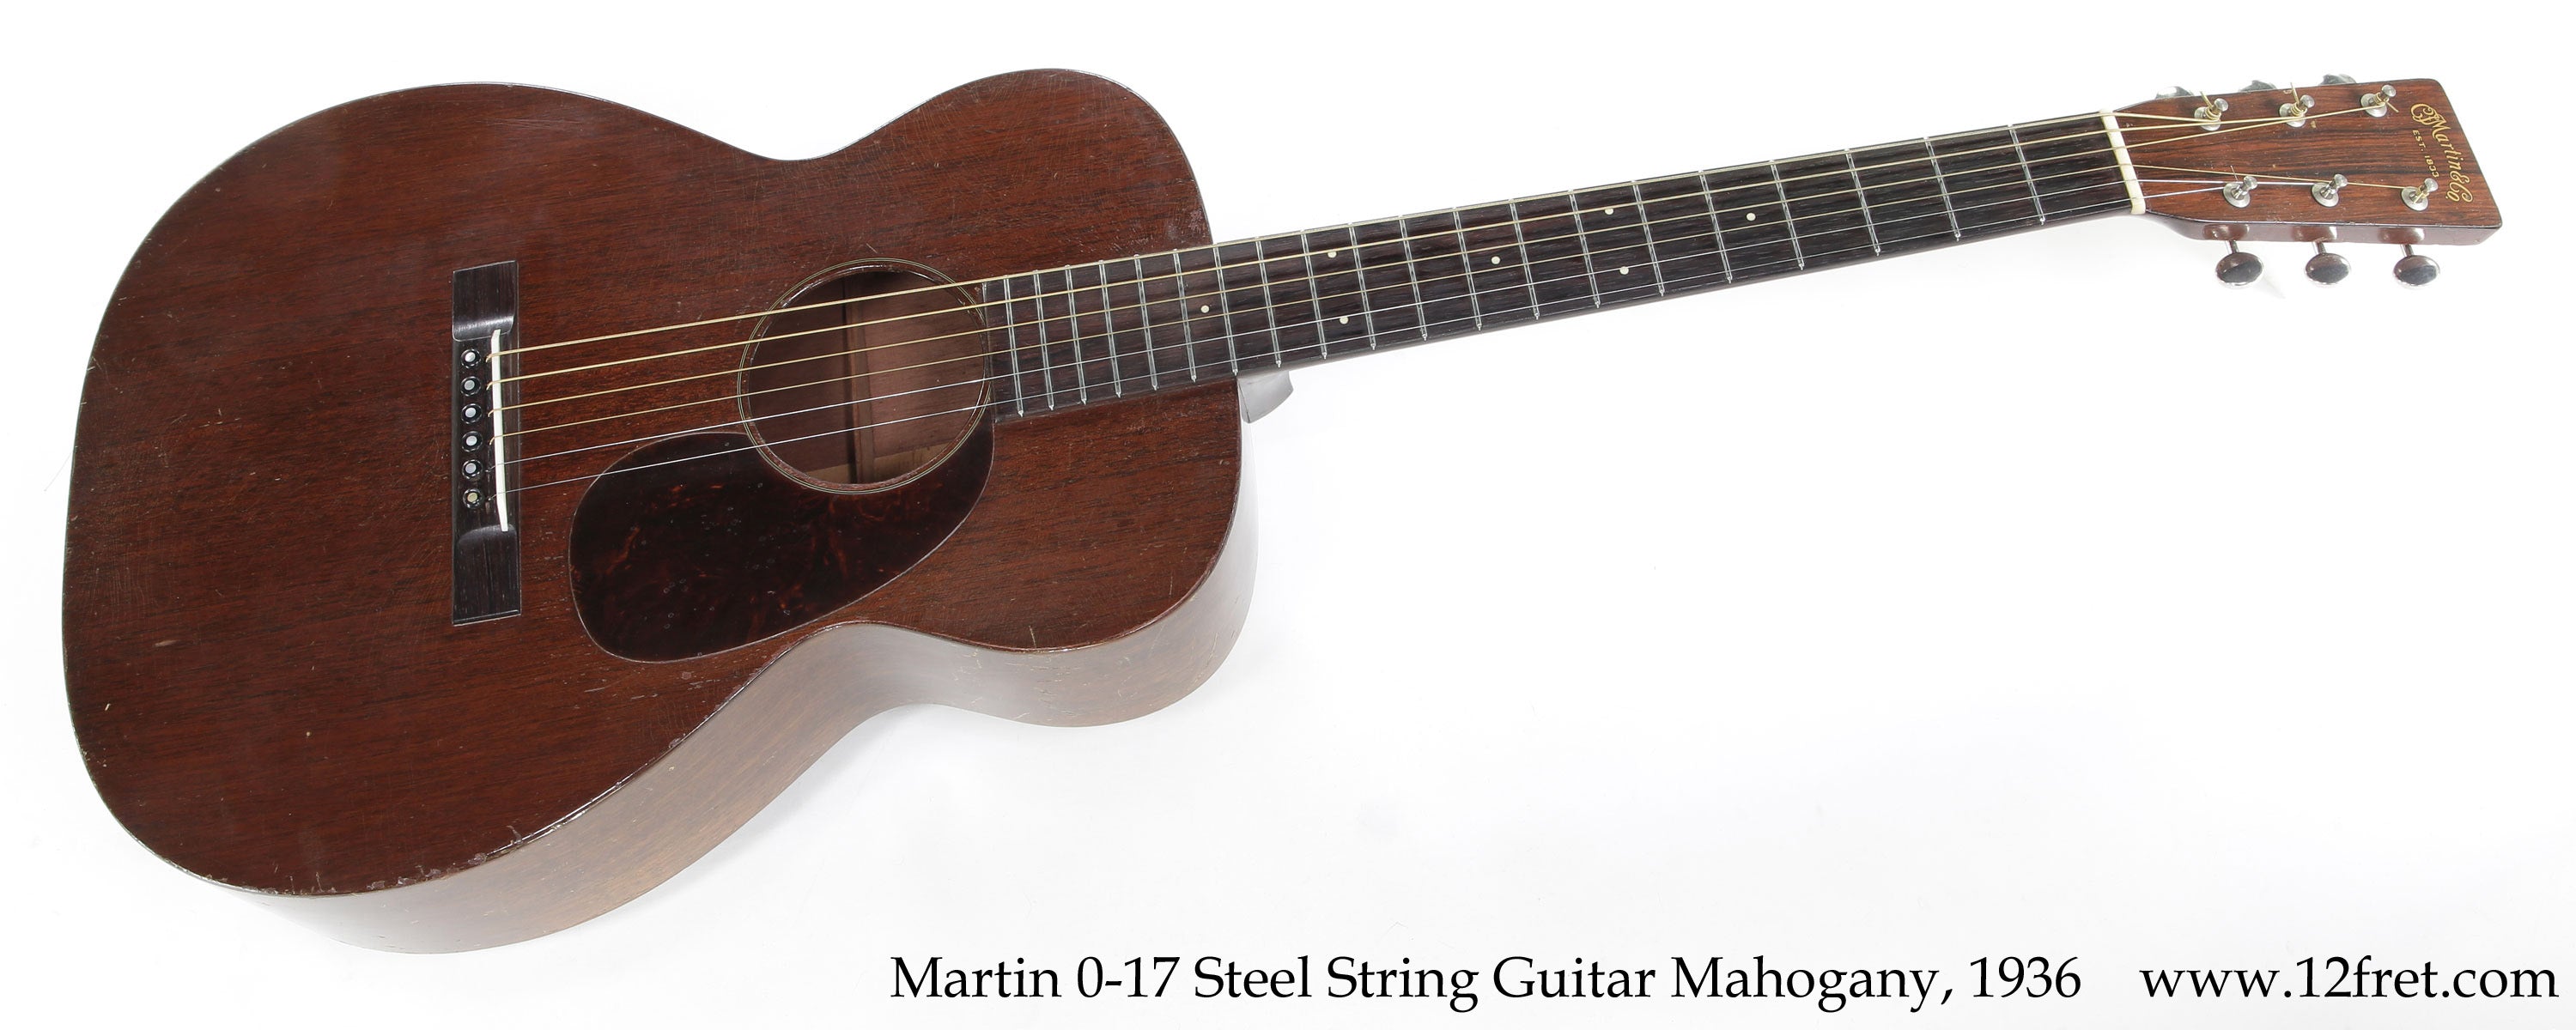 Martin 0-17 Steel String Guitar Mahogany, 1936 - The Twelfth Fret